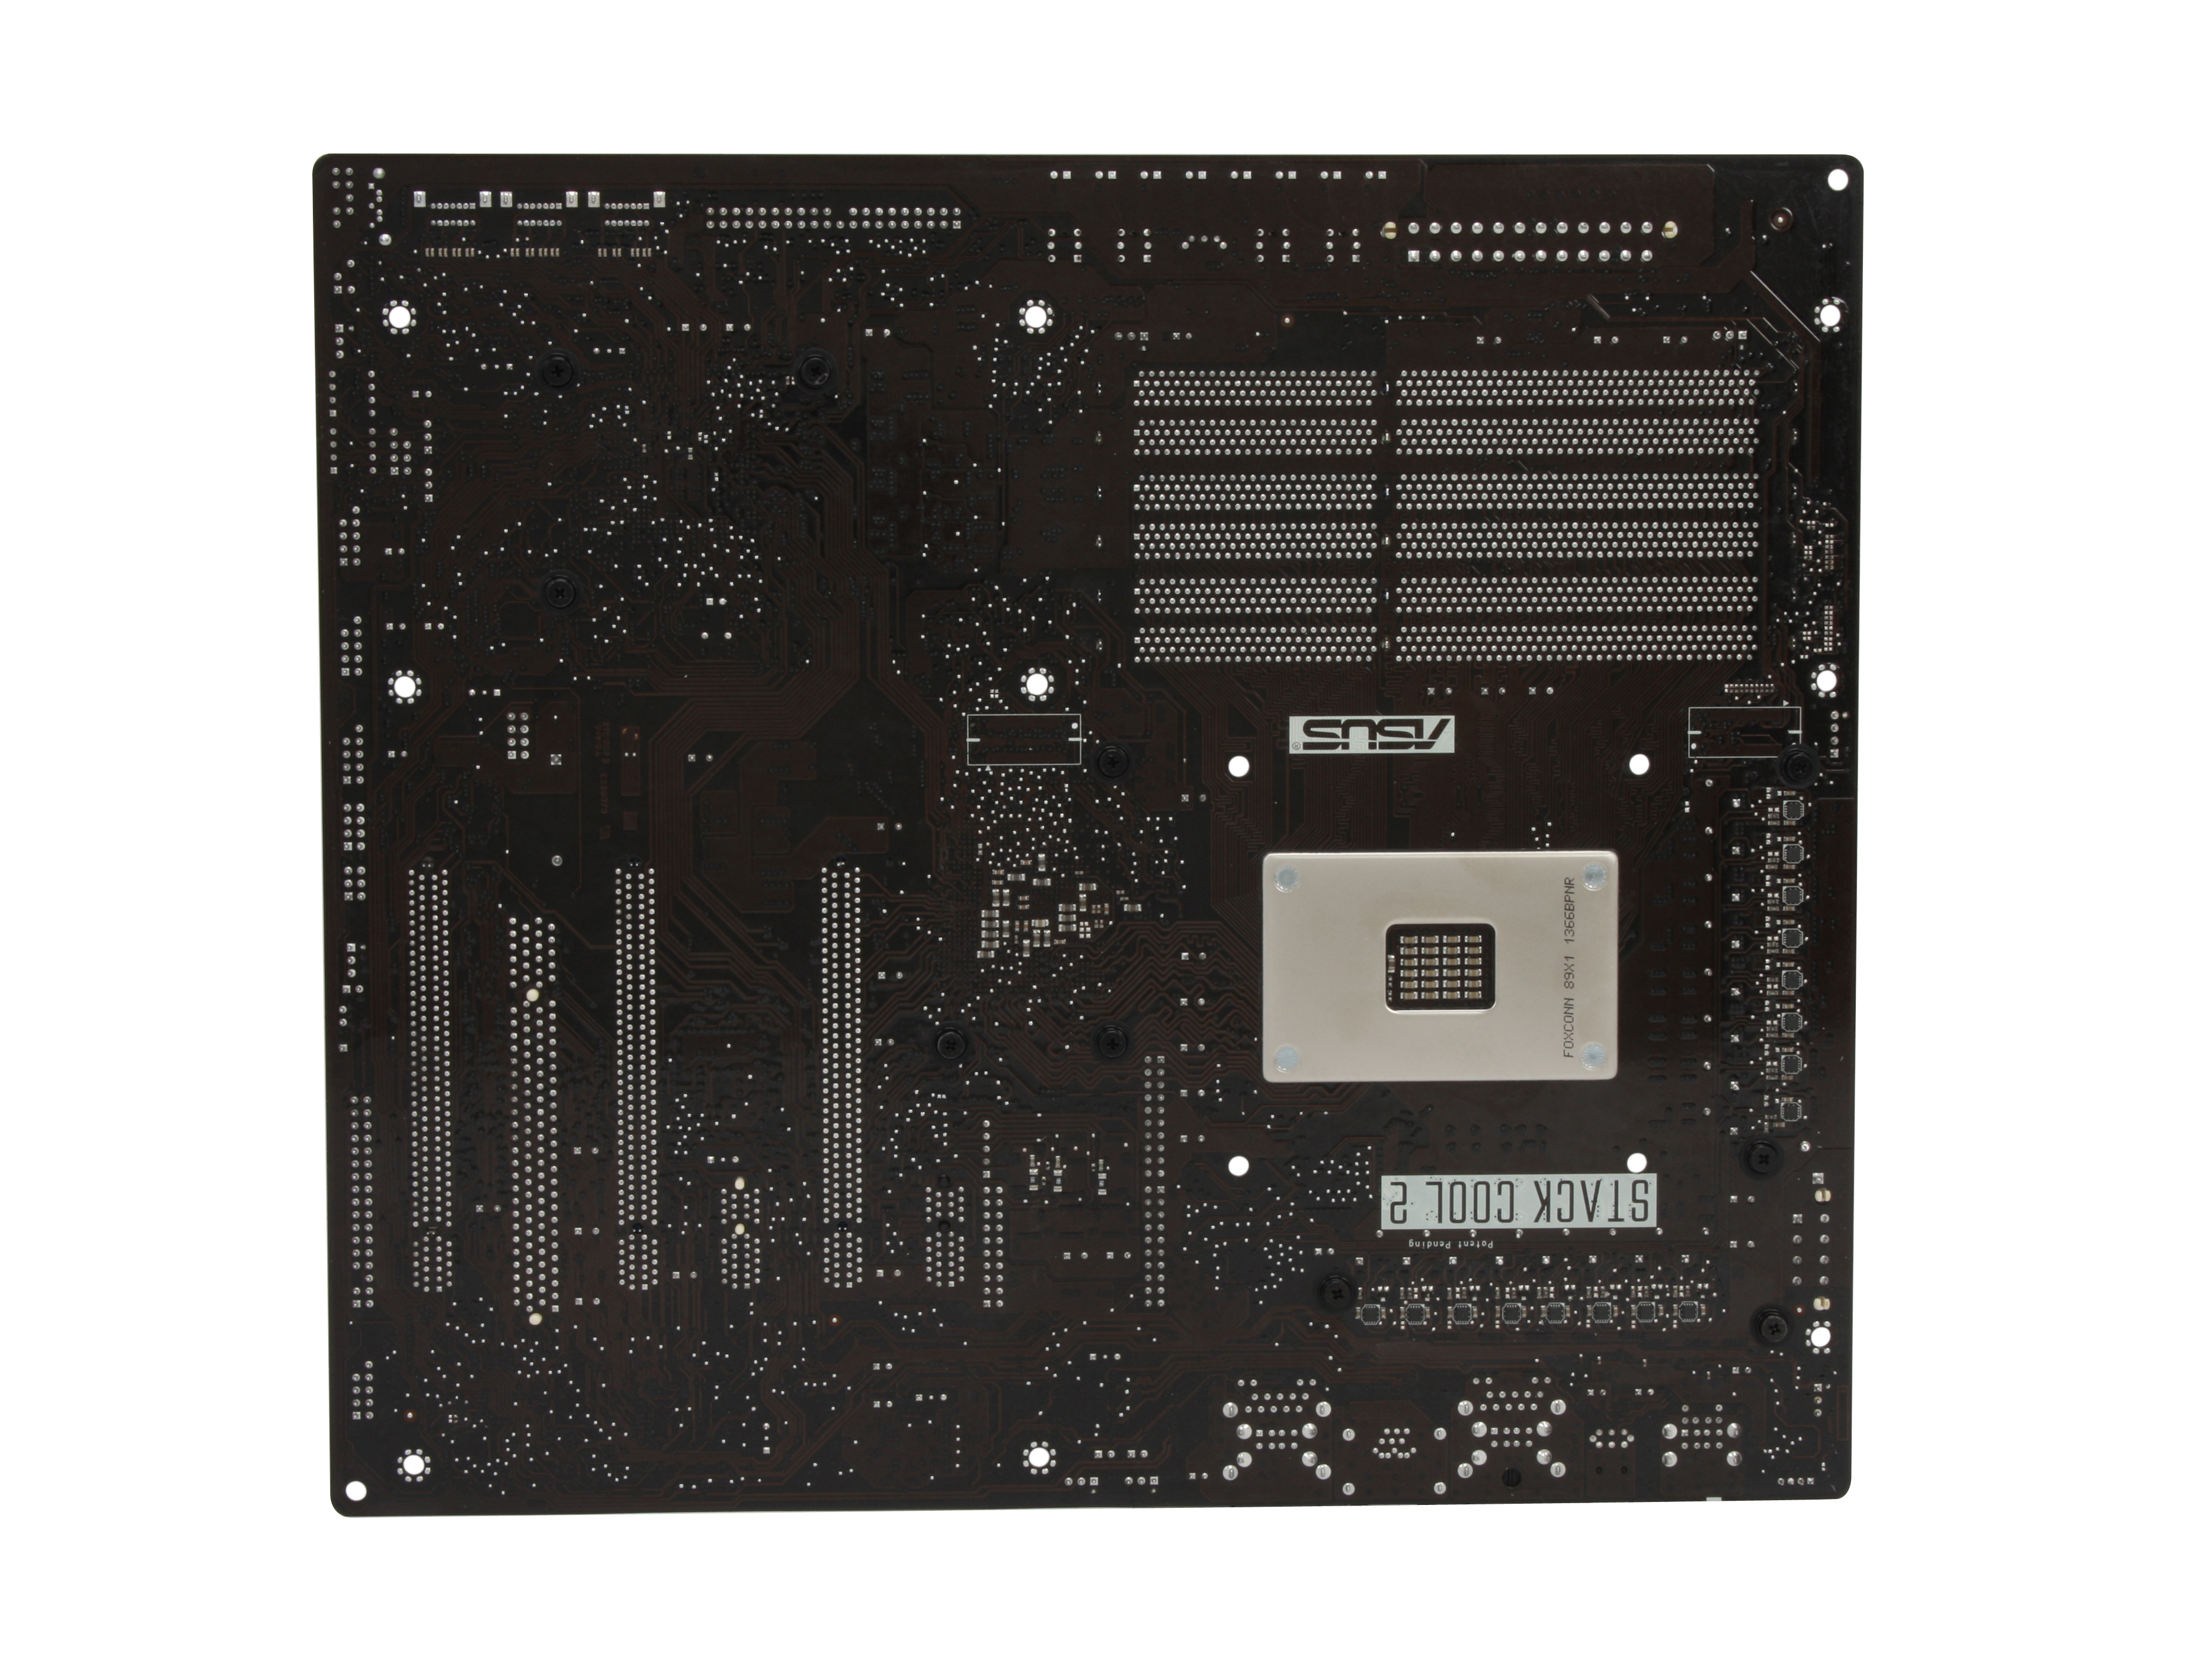 ASUS Rampage II Extreme LGA 1366 Intel X58 ATX Intel Motherboard